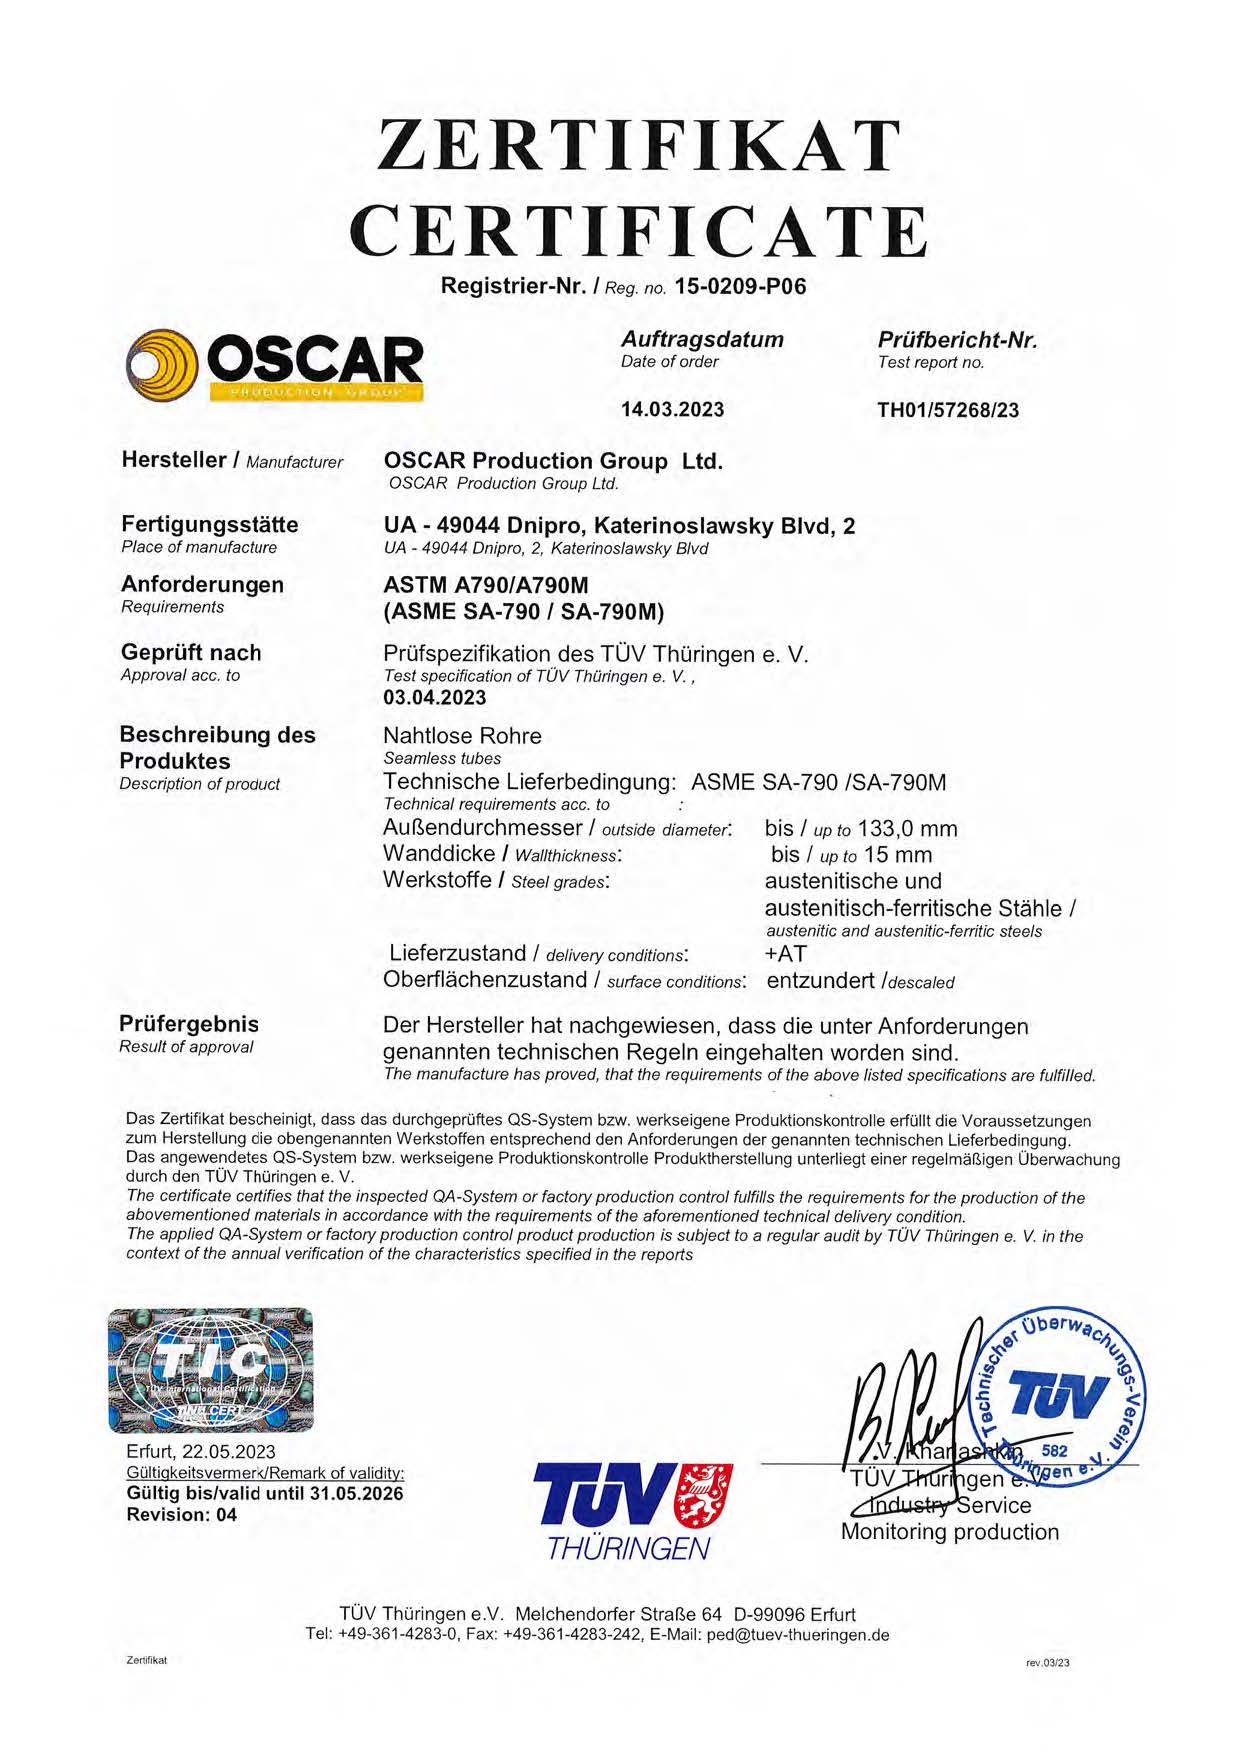 11 certificate ASTM ASME 790 de en